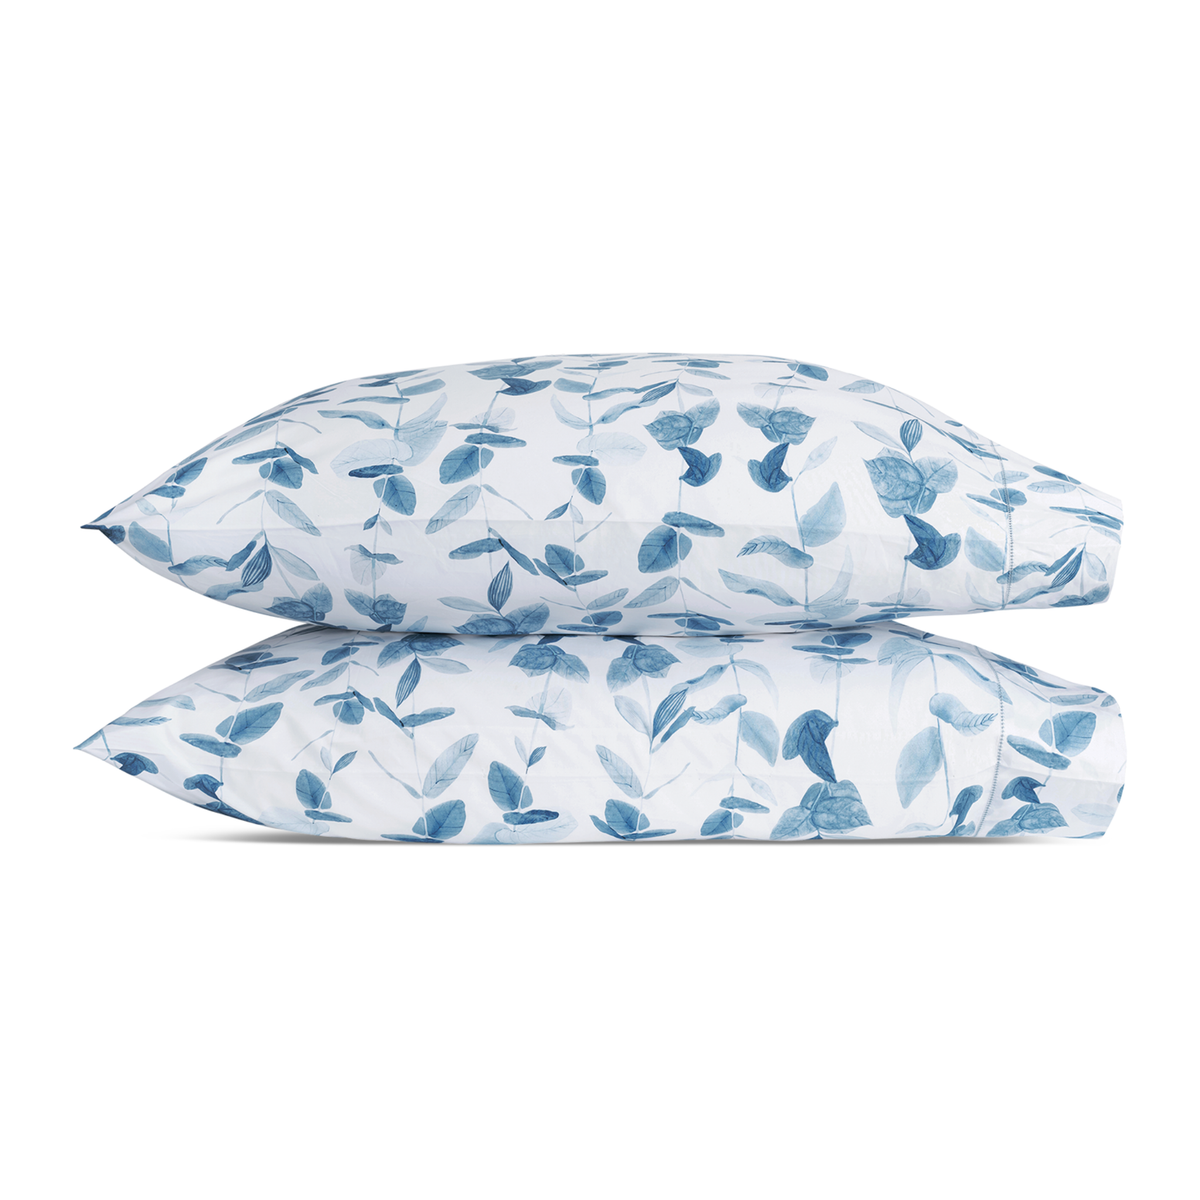 Pair of Pillowcases of Matouk Schumacher Antonia Bedding in Hazy Blue Color